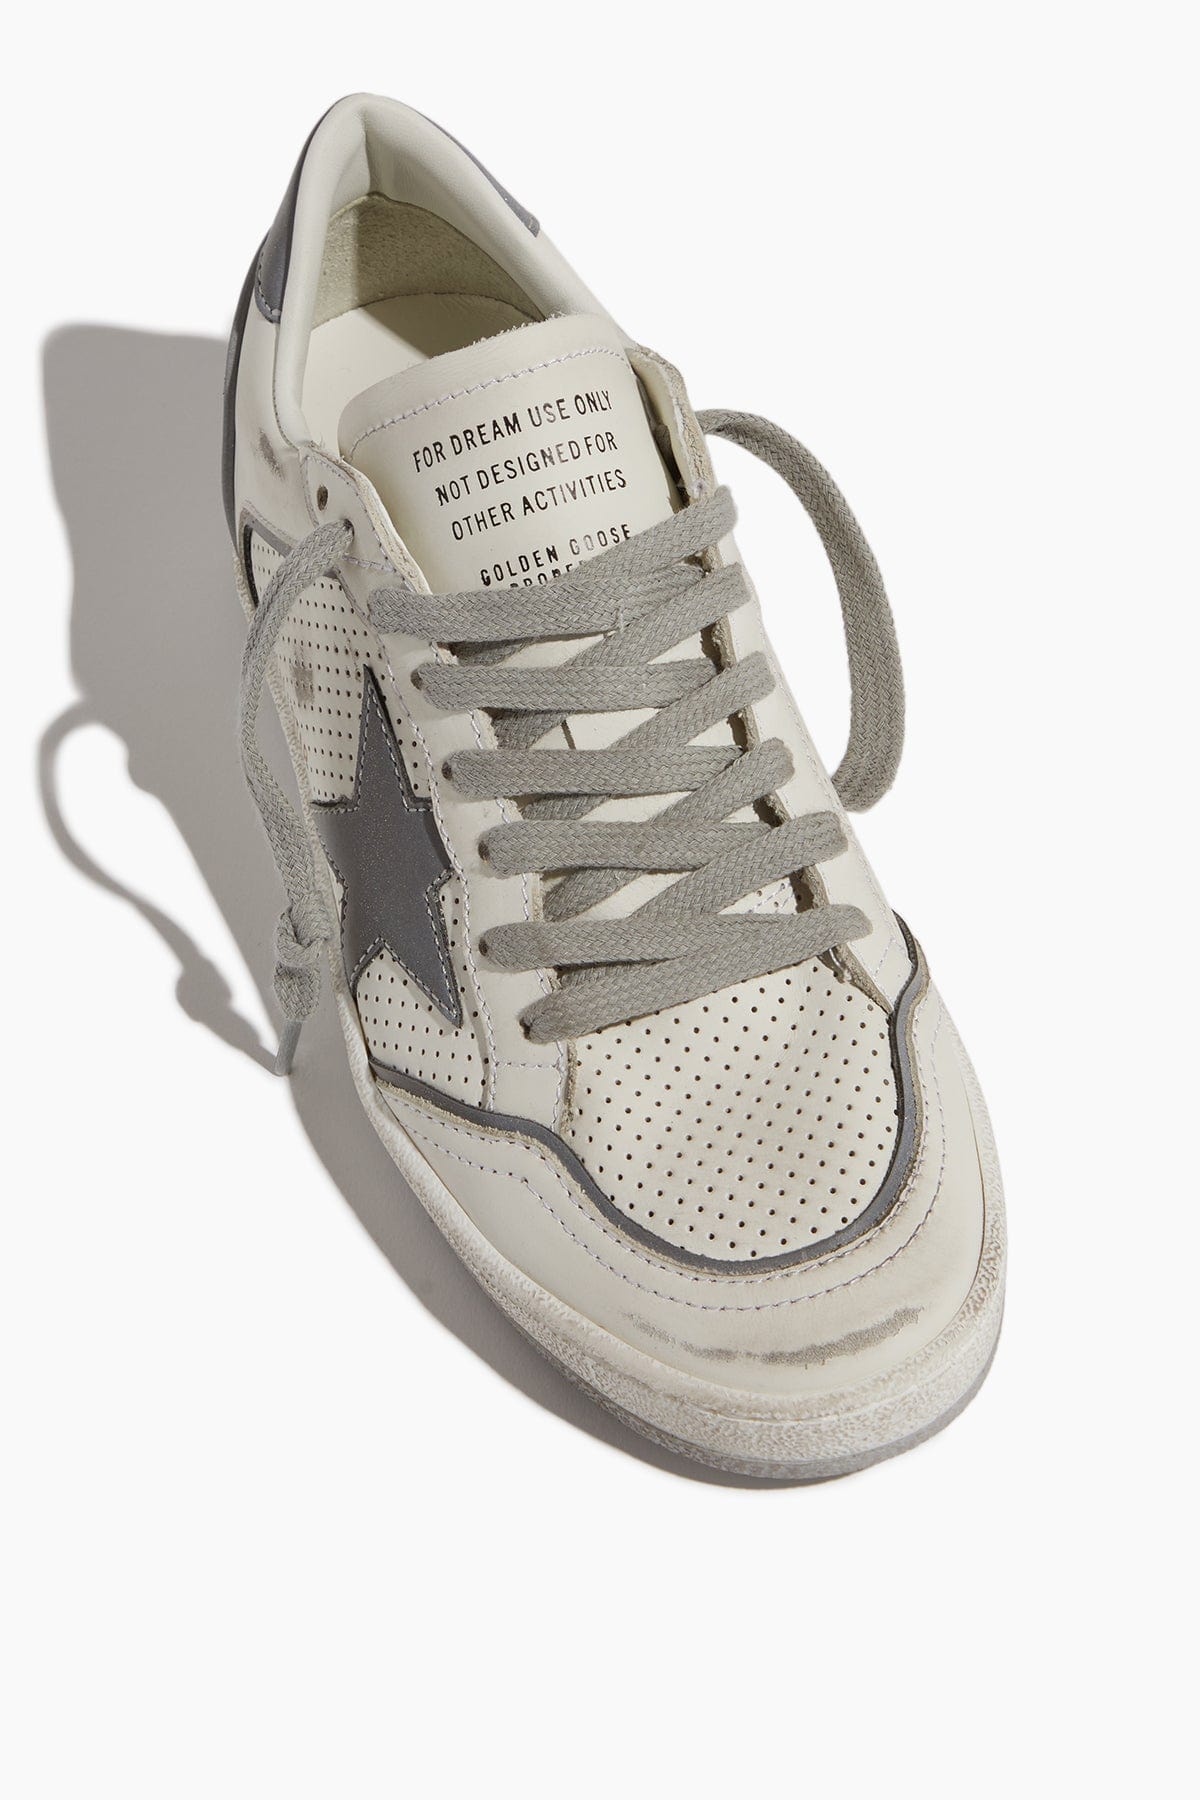 Ball Star Sneaker in White/Silver - 3